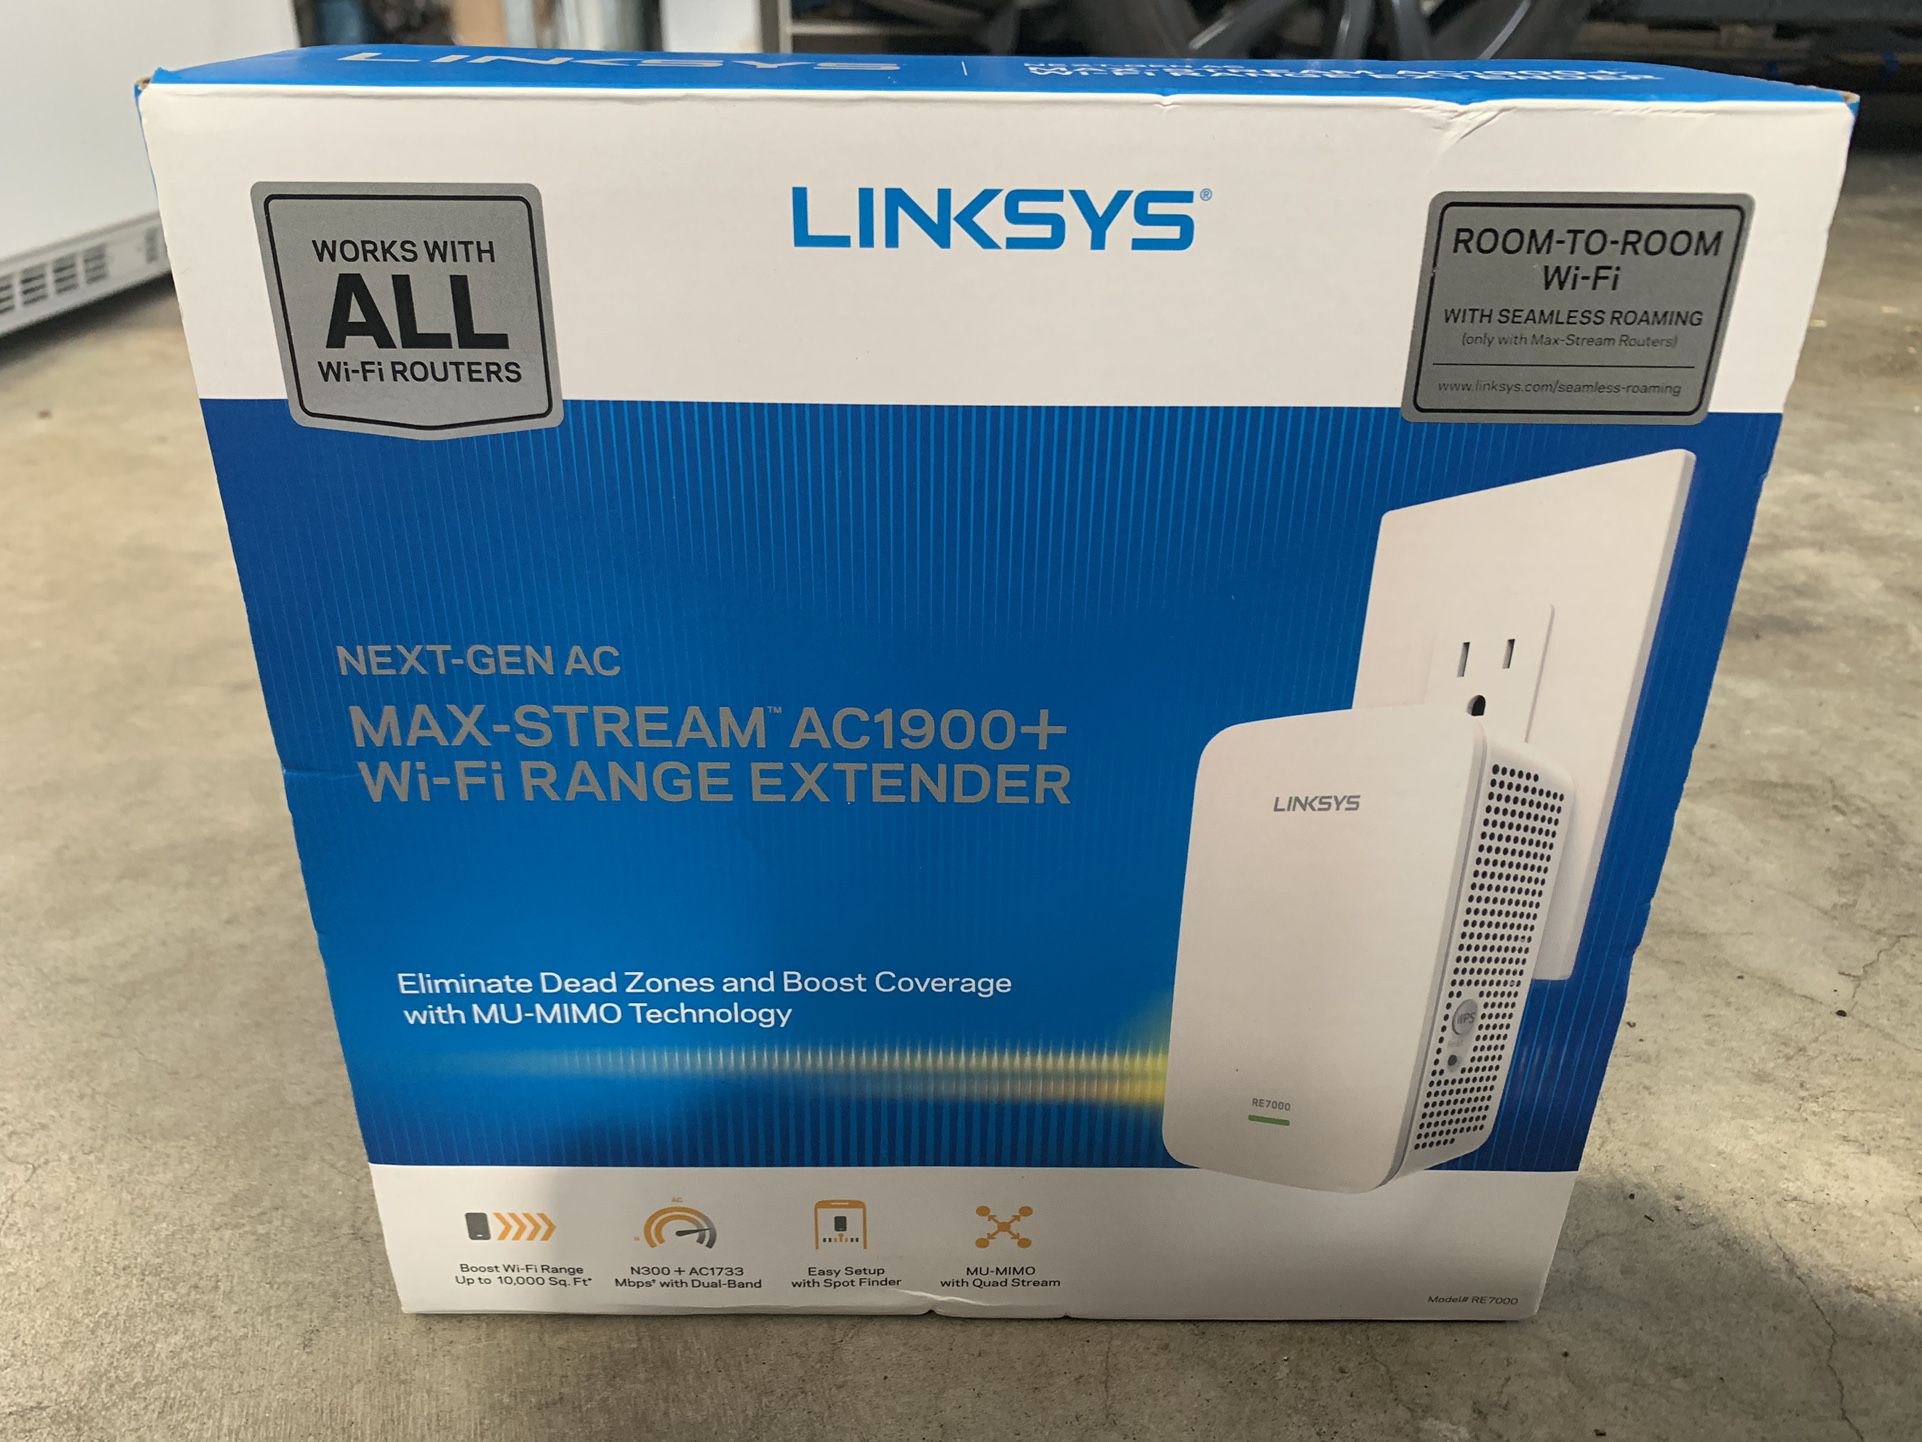 Linksys AC1900+ WiFi extender